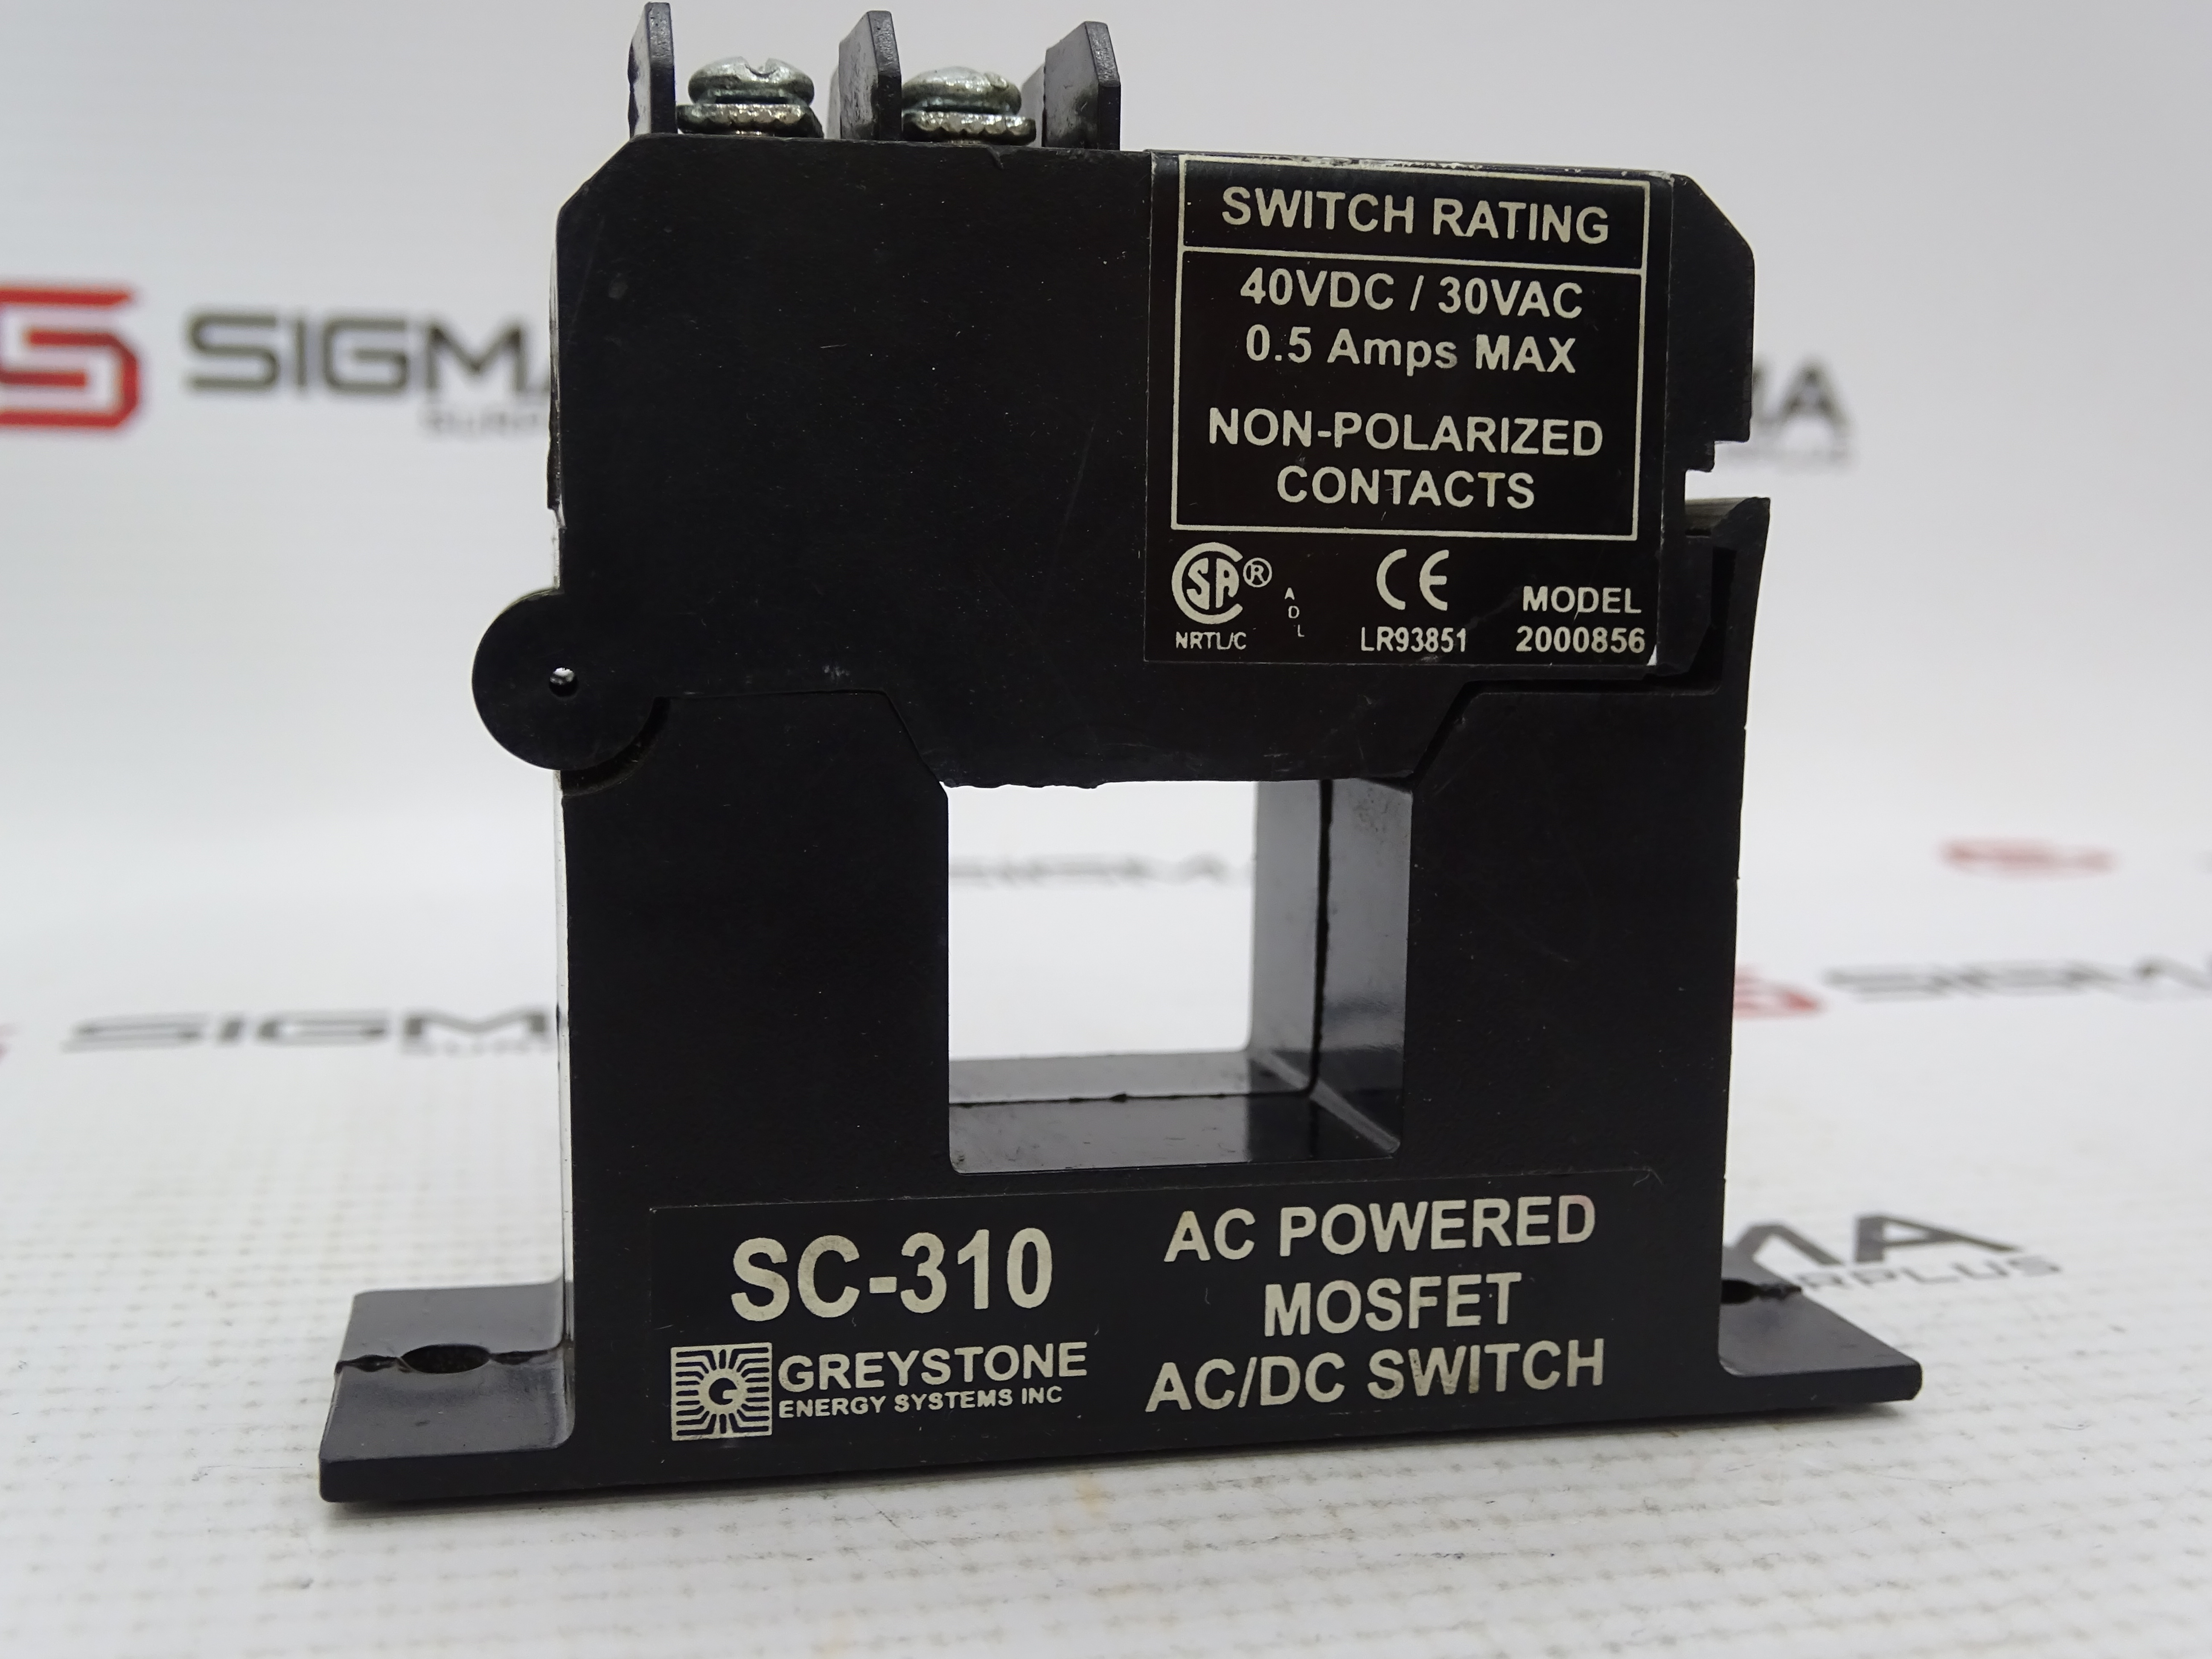 40VDC 0.5A MOSFET AC/DC SWITCH SC-310 GREYSTONE